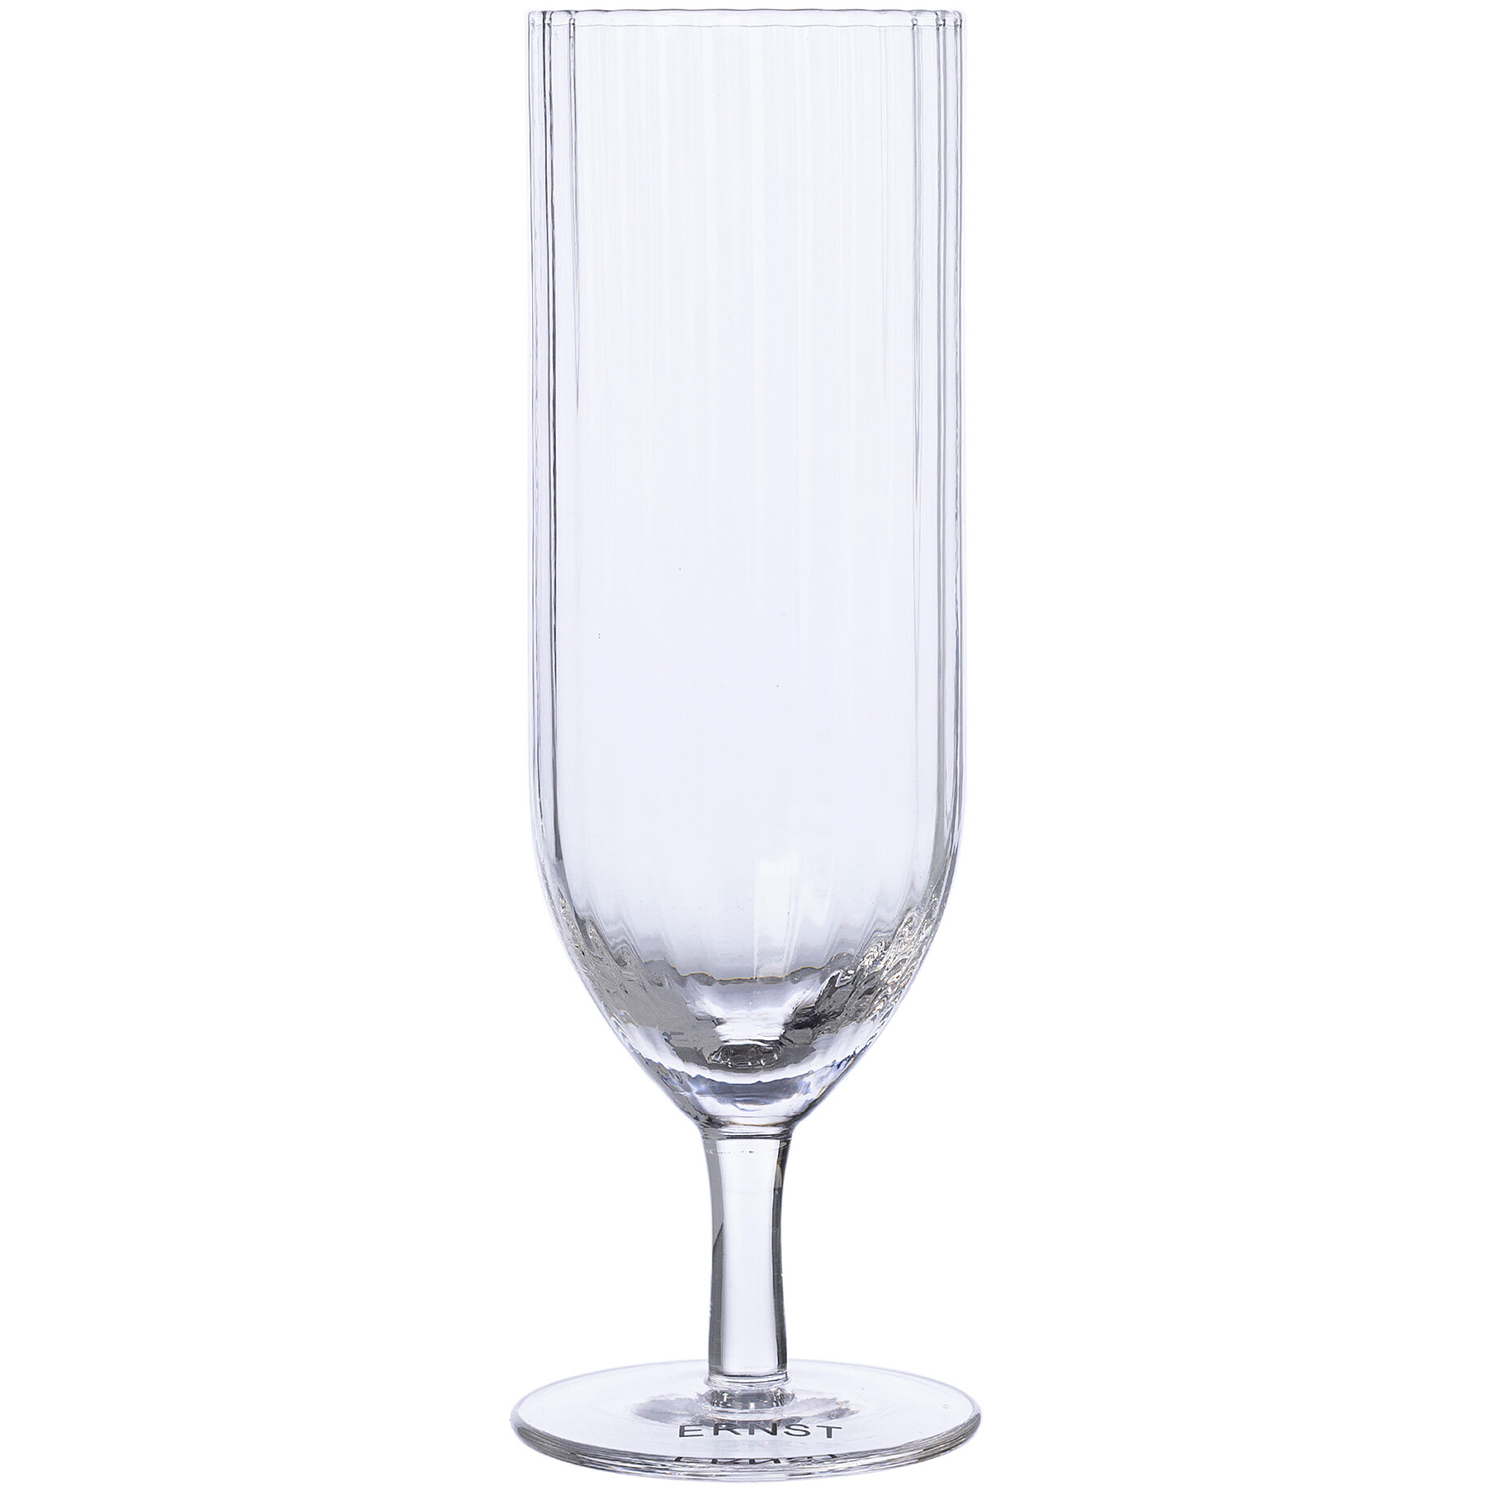 Drinking Glasses Fluted With Foot 4-pack - ERNST @ RoyalDesign